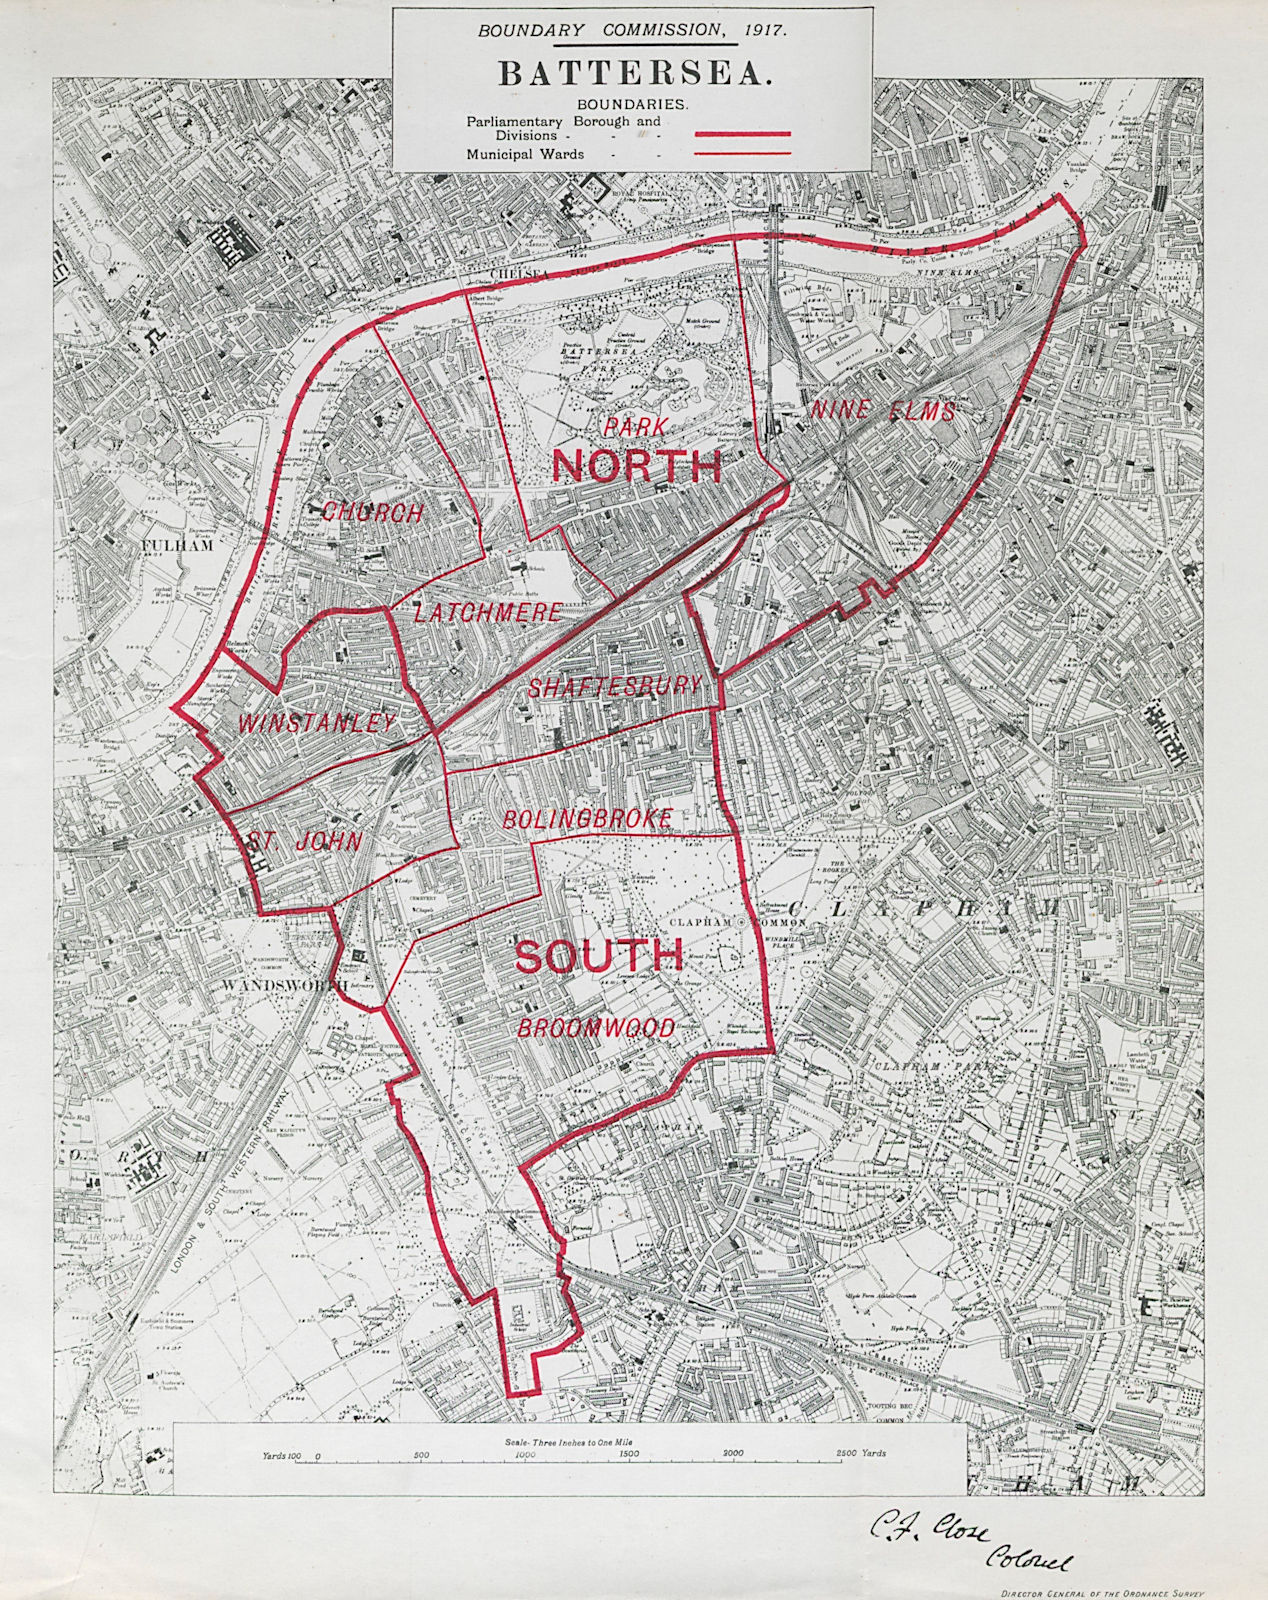 Battersea Parliamentary Borough. Clapham Nine Elms BOUNDARY COMMISSION 1917 map